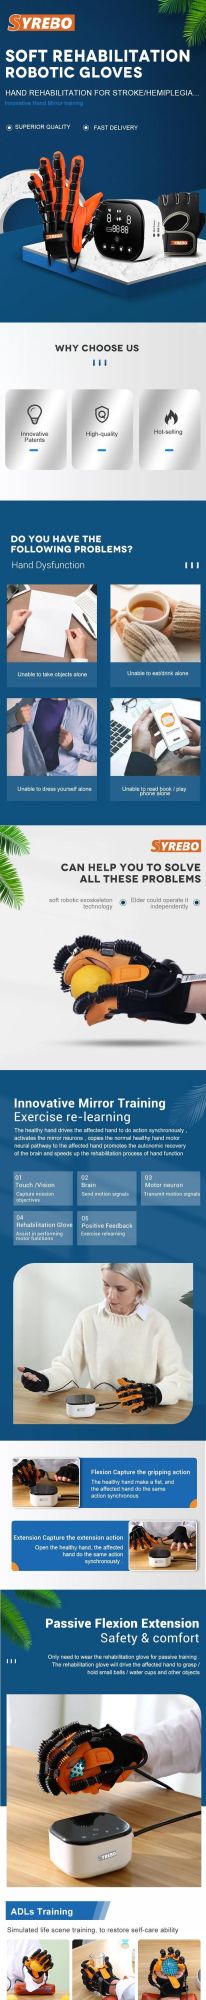 Physiotherapy Hand Rehabilitation Gloves Robotic Rehabilitation Therapy Equipment of Robotic Glove for Hemiplegia